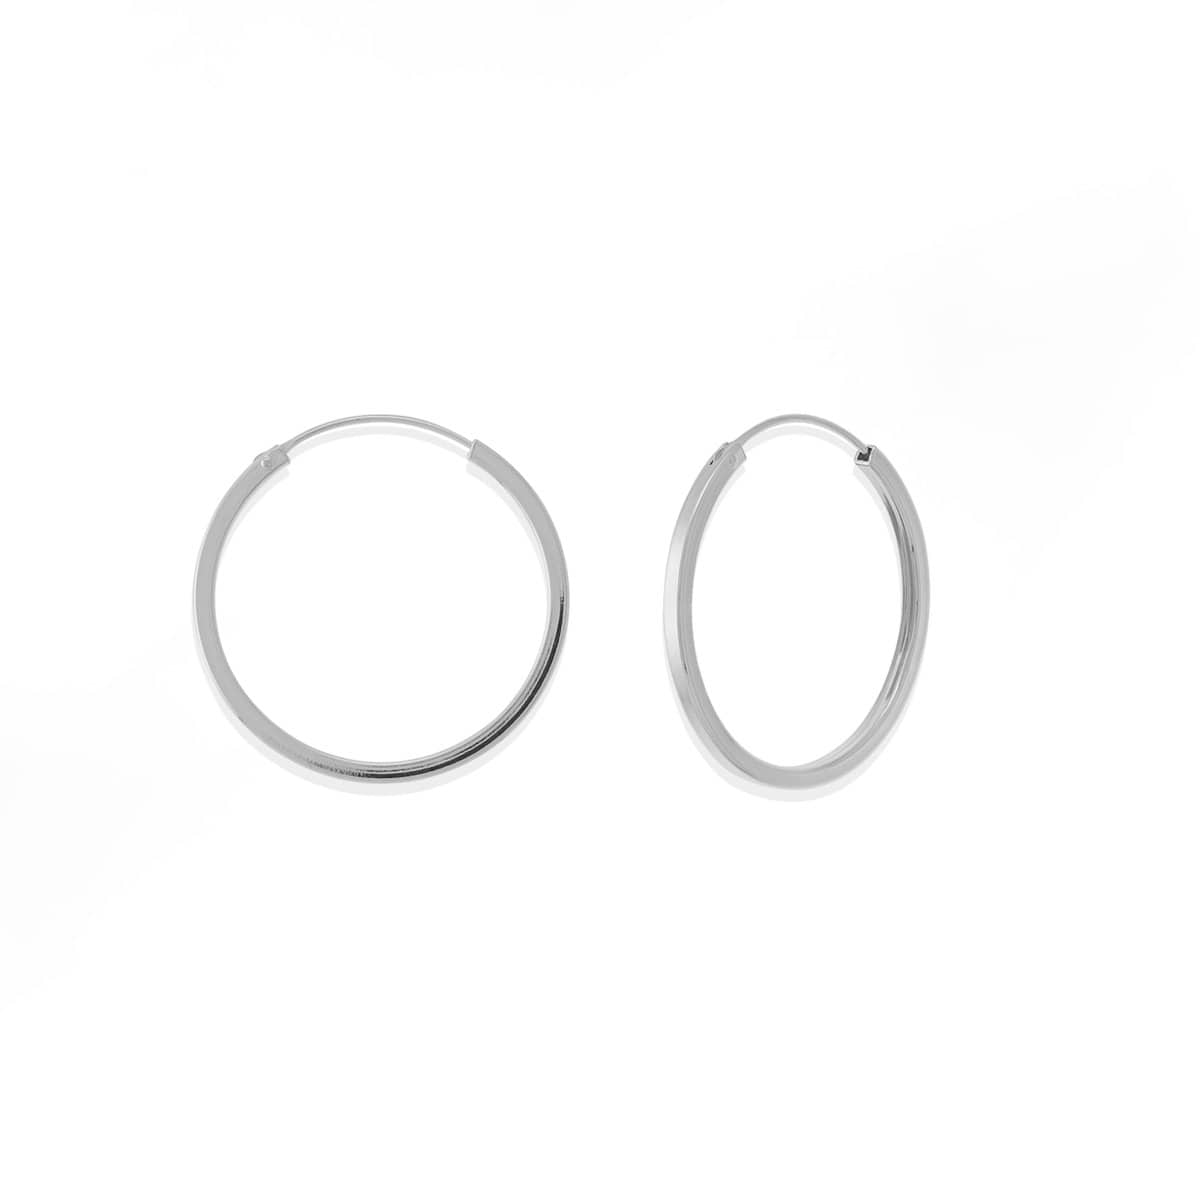 Boma Jewelry Earrings Sterling Silver / 1.2" Nikko Hoops